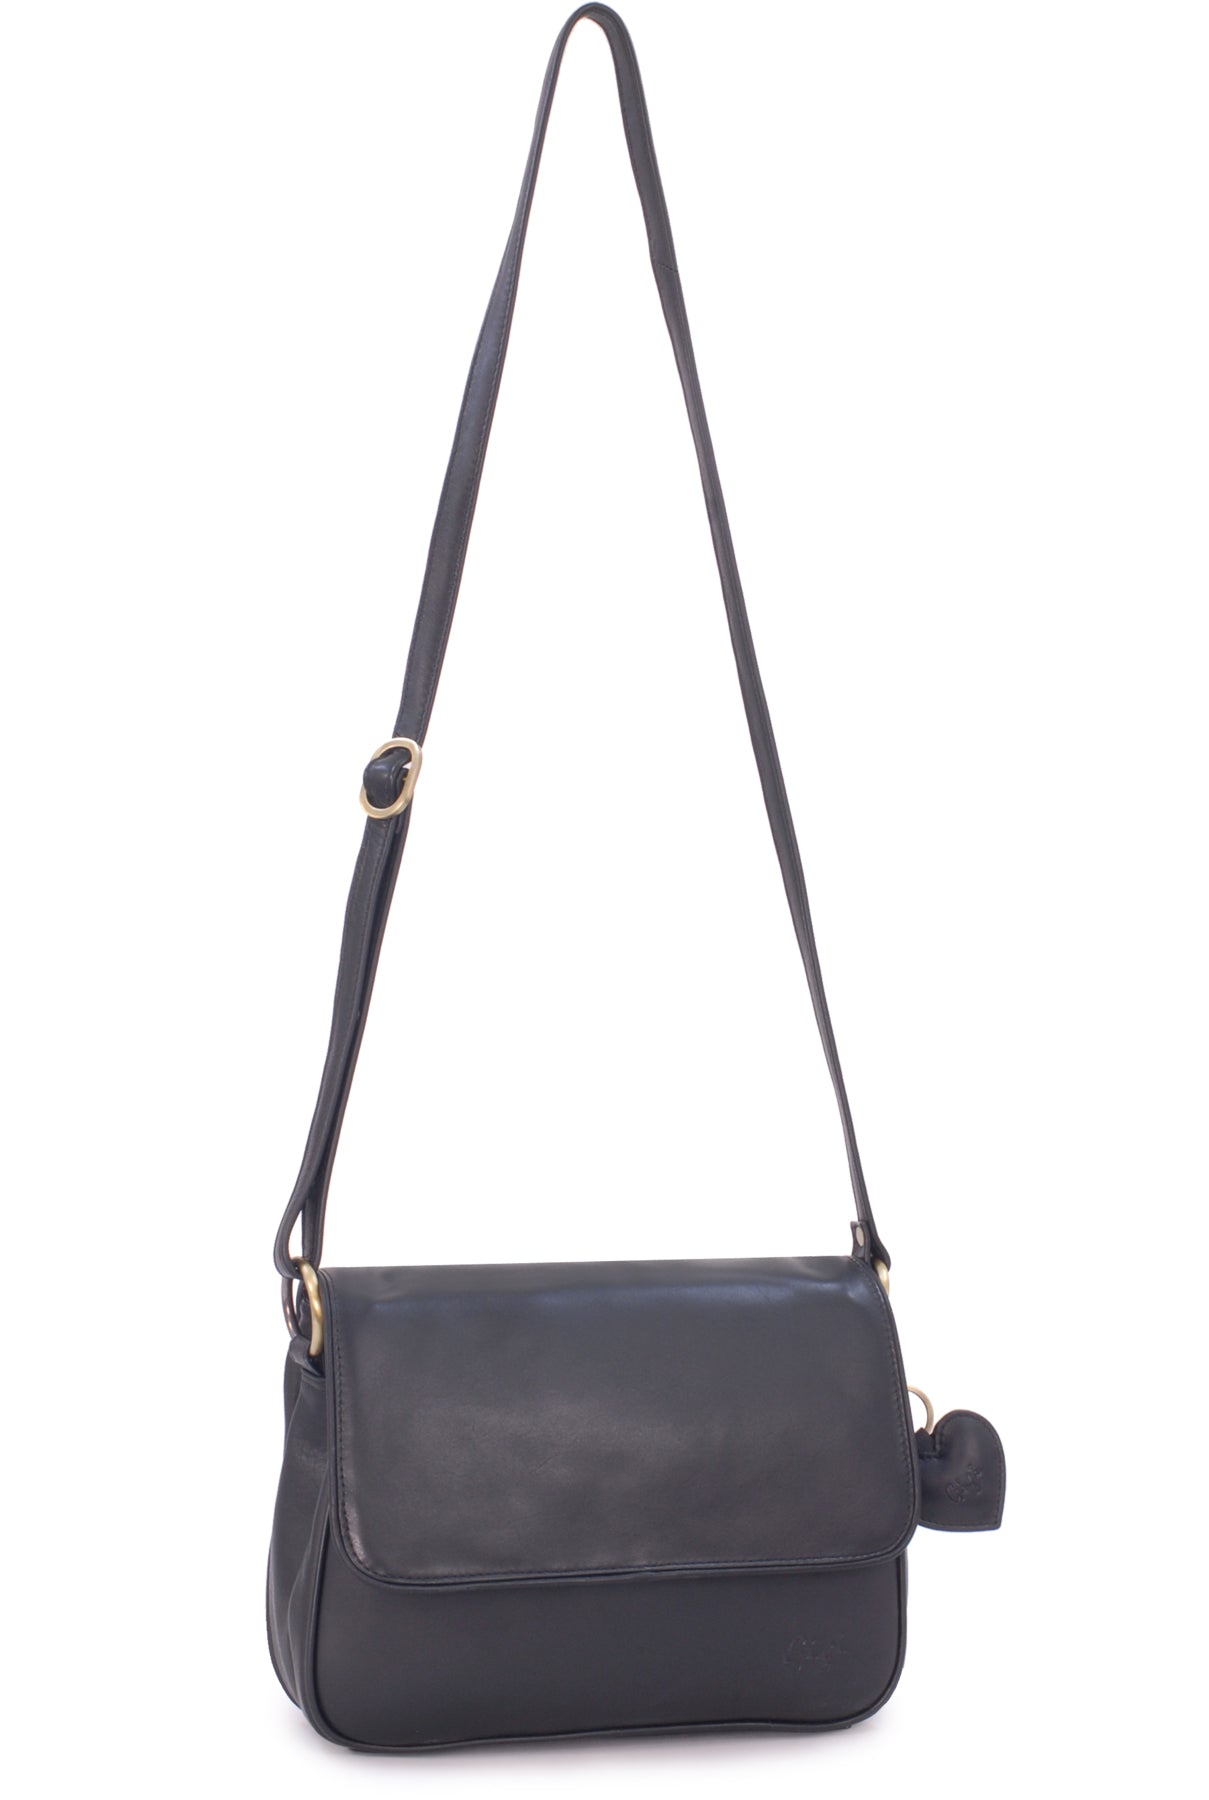 Large Black Leather Hobo Bag - Slouchy Shoulder Purse | Laroll Bags